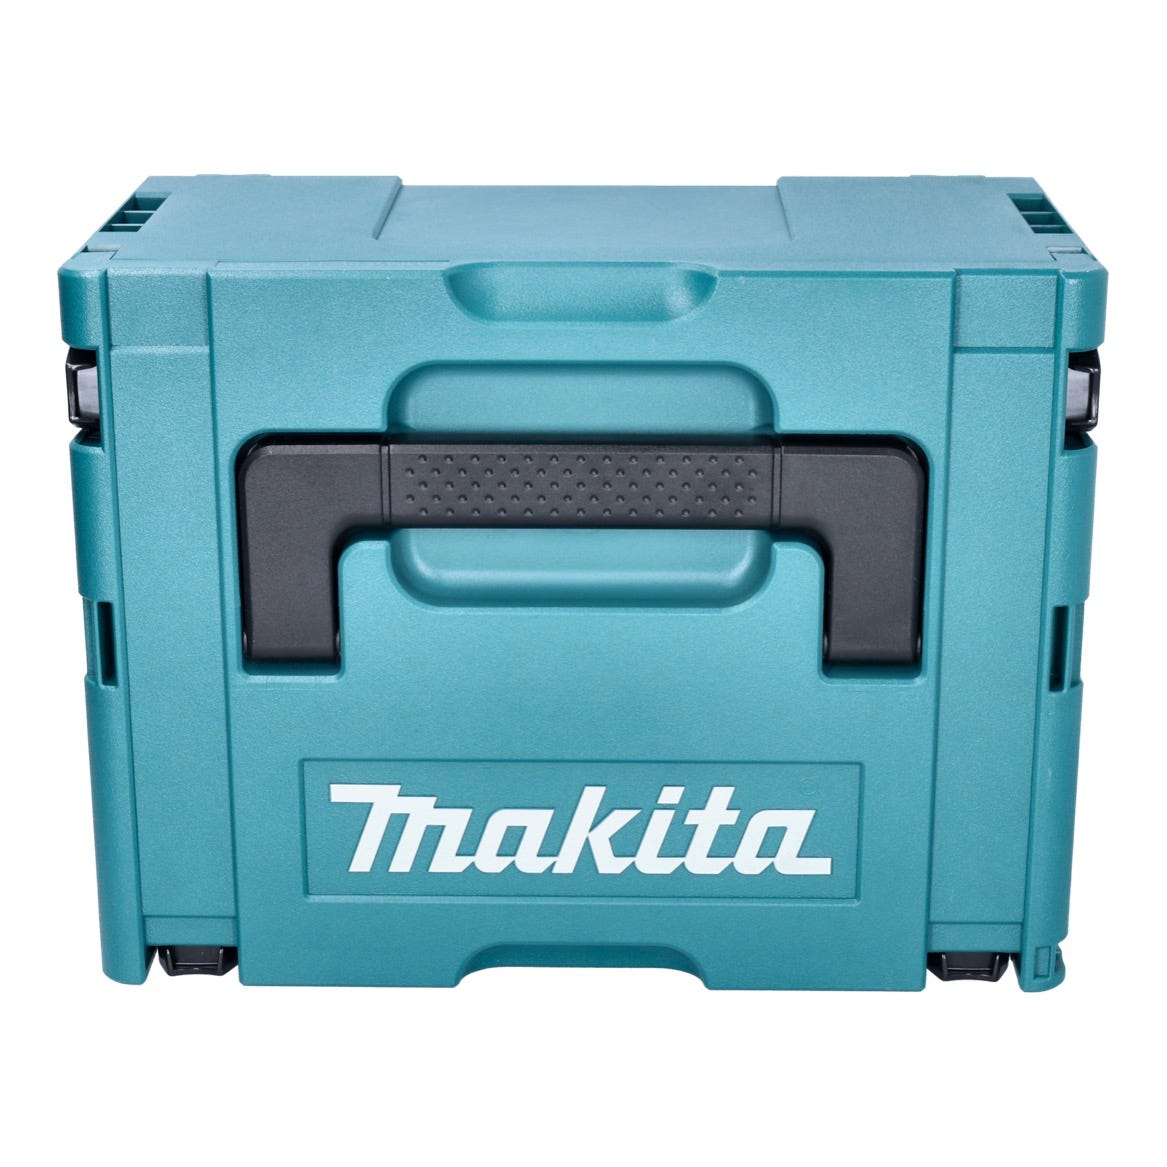 Makita DJV185RFJ Scie sauteuse sans fil 18V Brushless + 2x Batteries 3,0Ah + Chargeur + Coffret Makpac 2